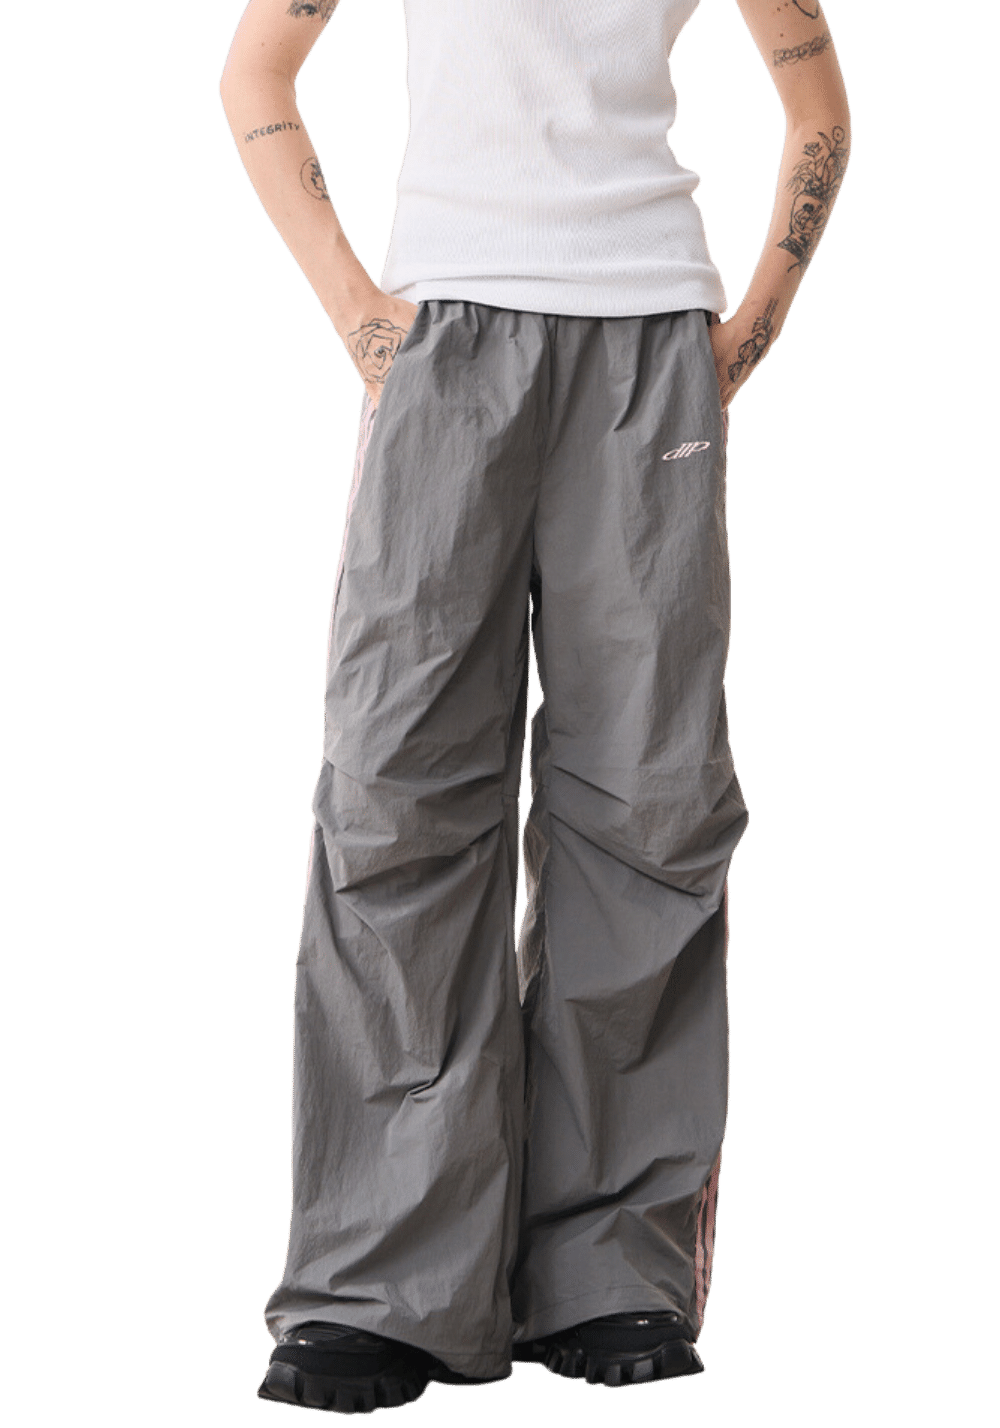 Striped Cuffed Jogger Pants - PSYLOS 1, Striped Cuffed Jogger Pants, Pants, MODITEC, PSYLOS 1